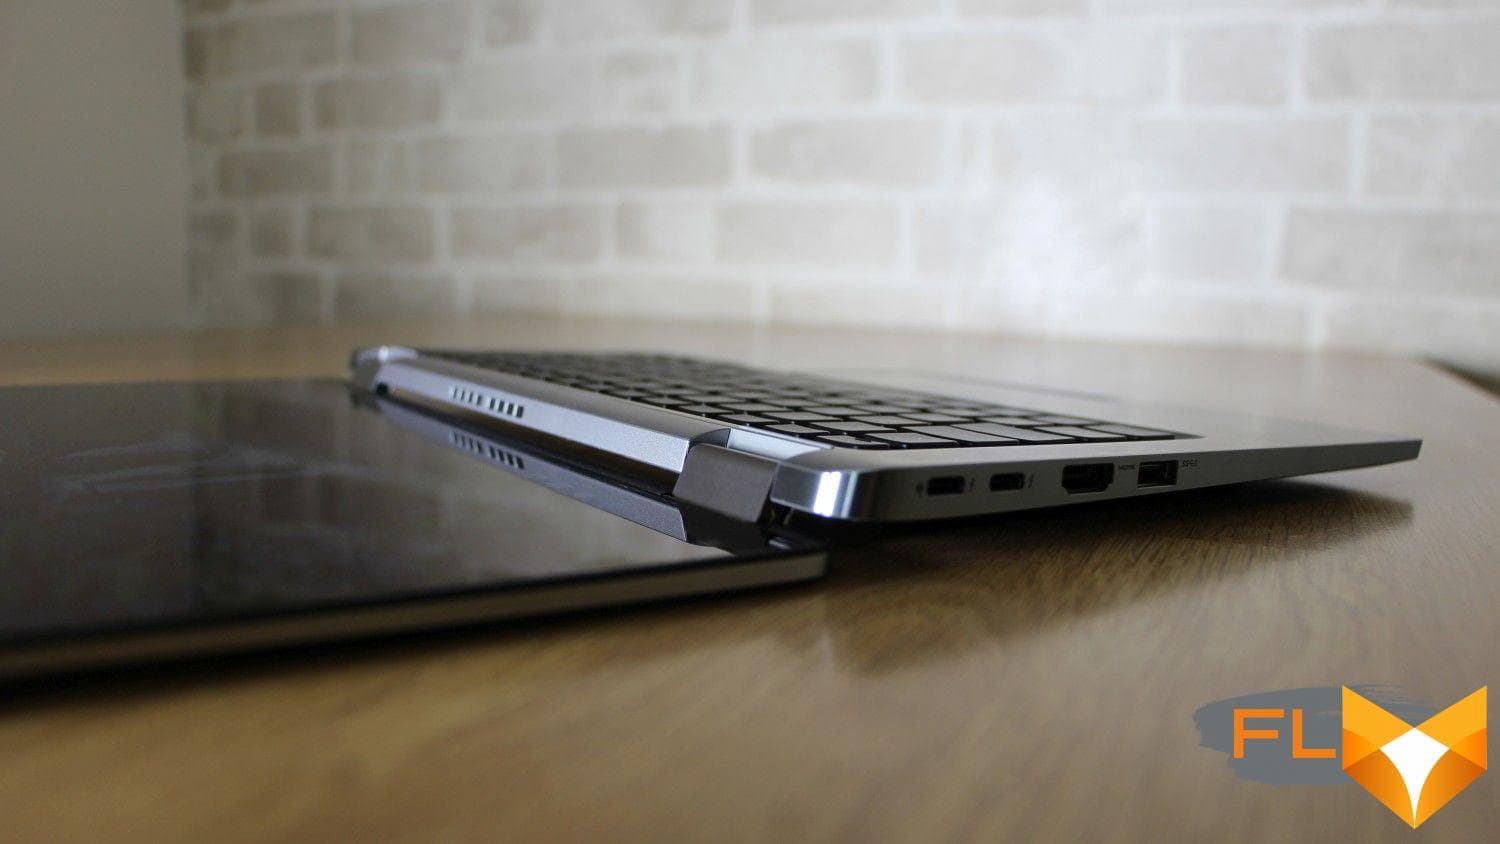 Dell Latitude 7400 2-in-1 hybrid laptop